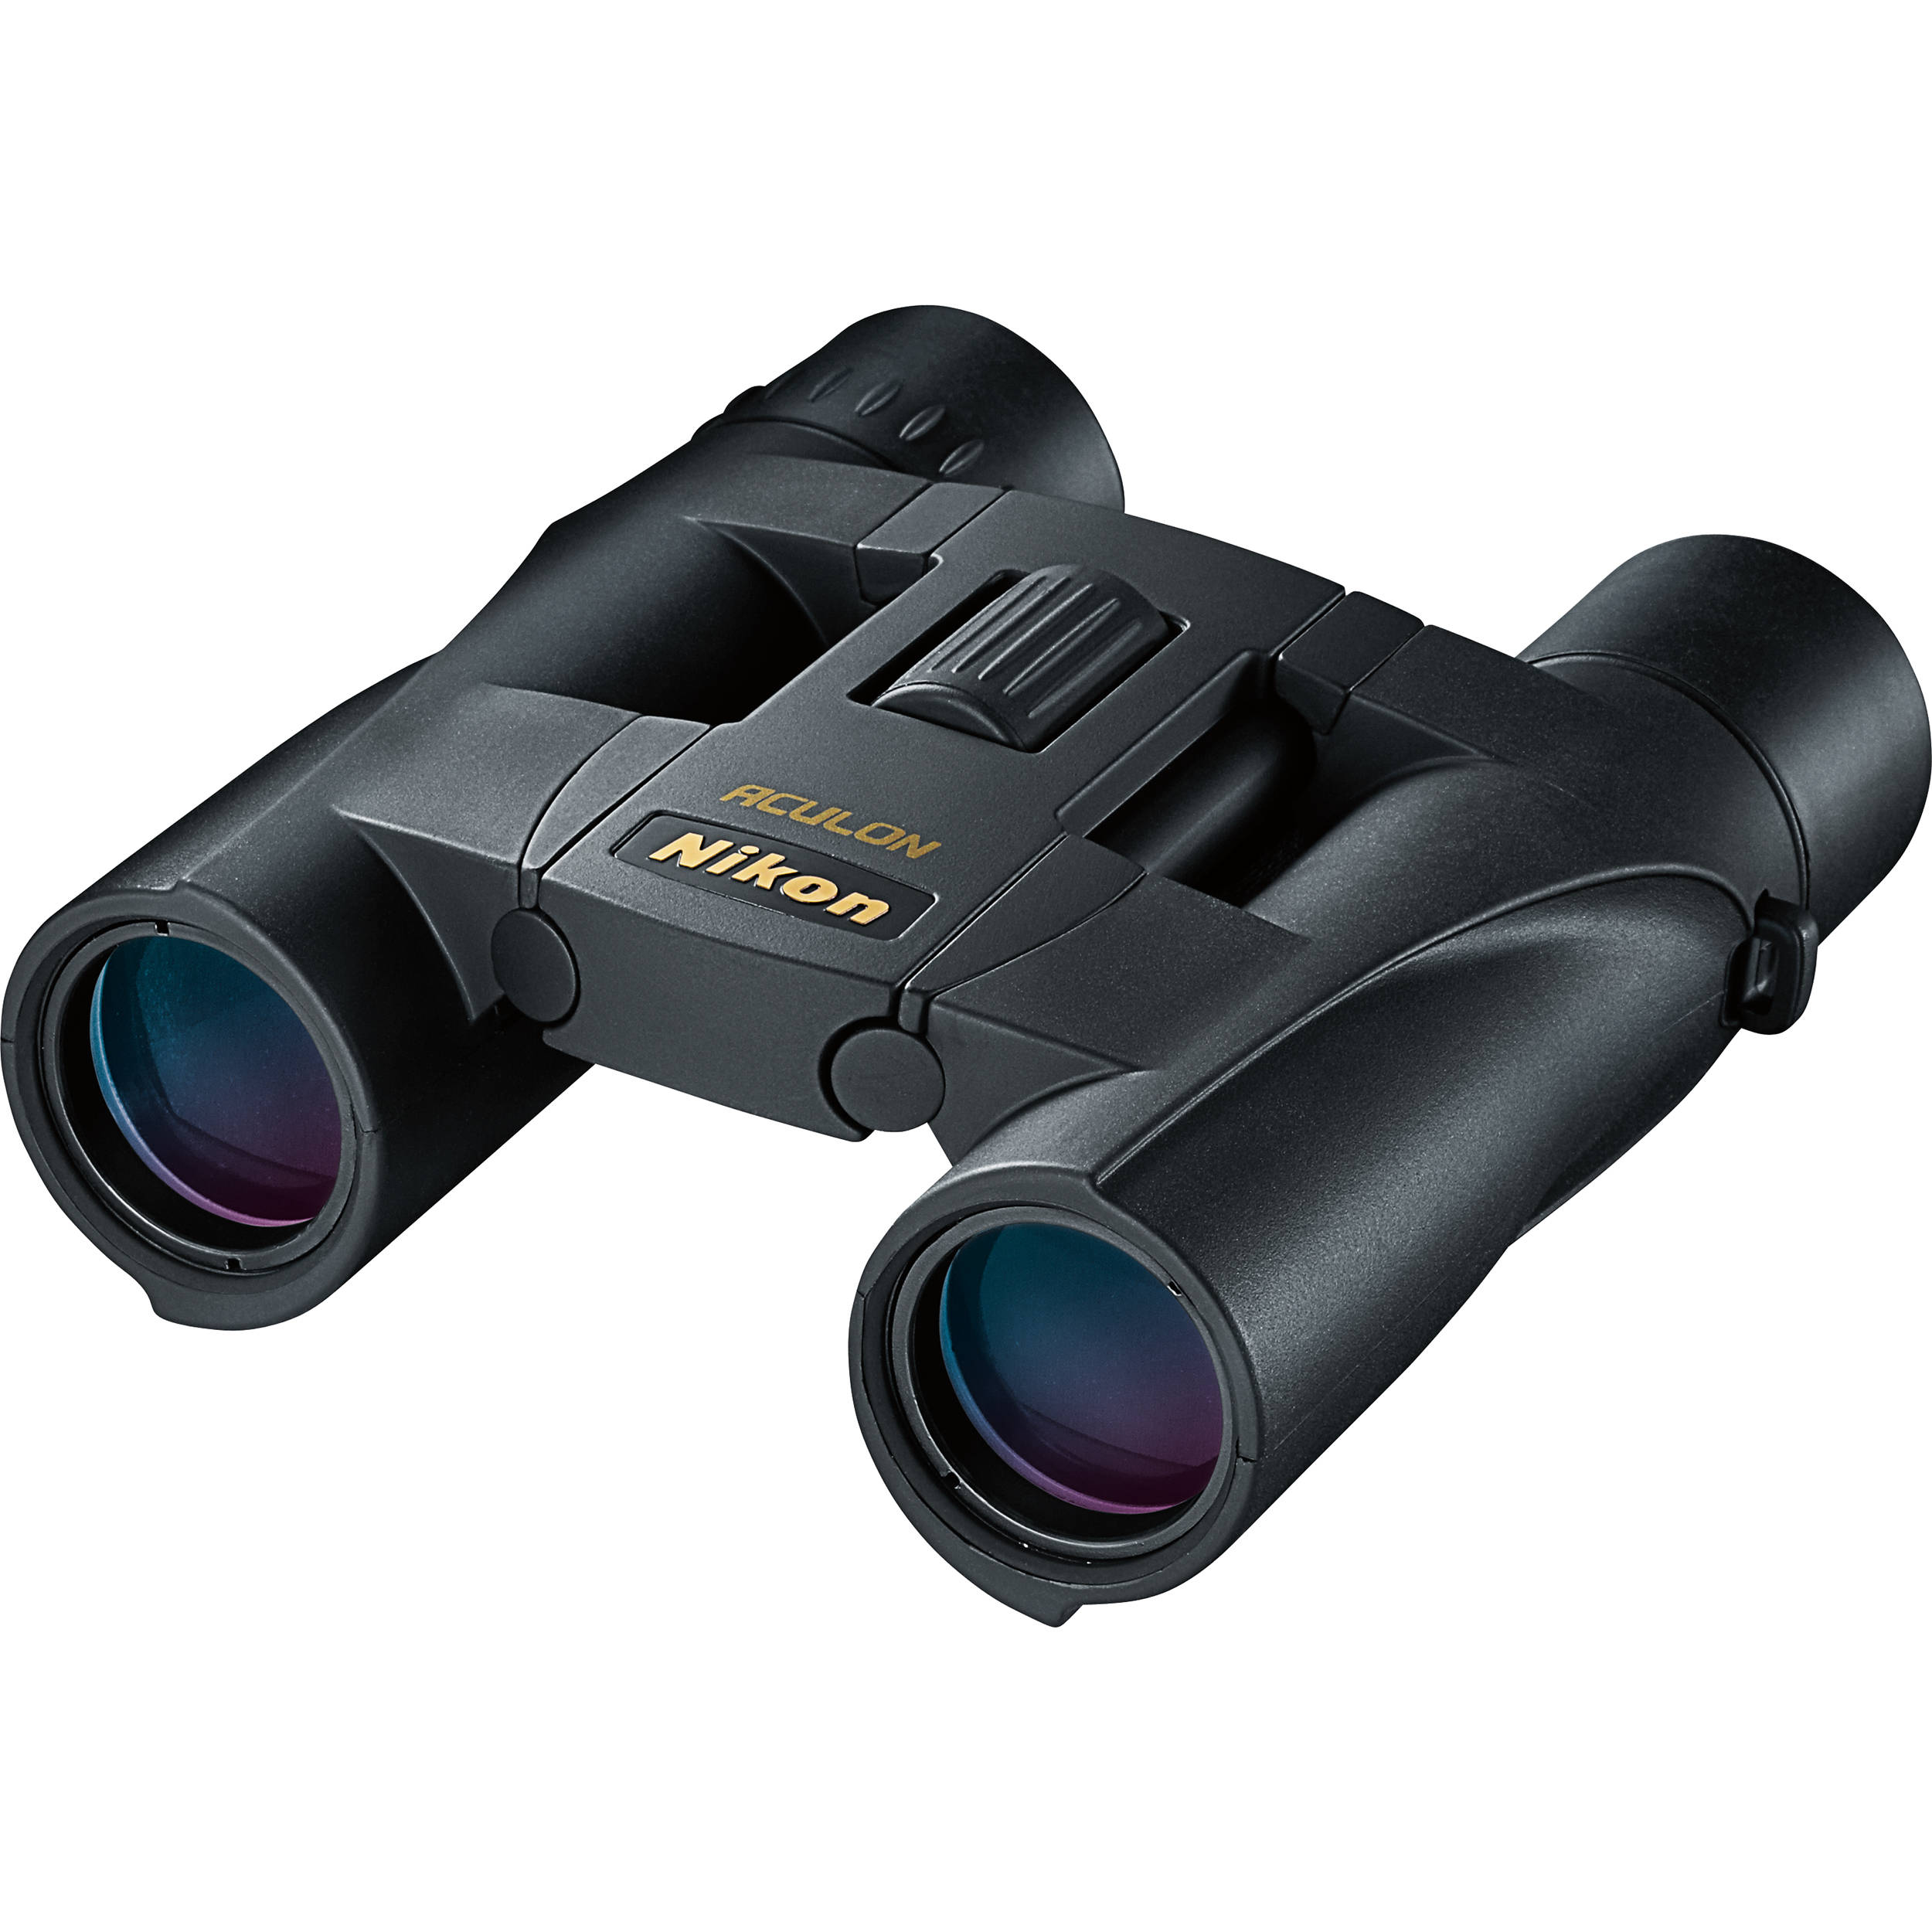 Nikon 10x25 Aculon A30 Binoculars (Black) 8263 B&H Photo Video